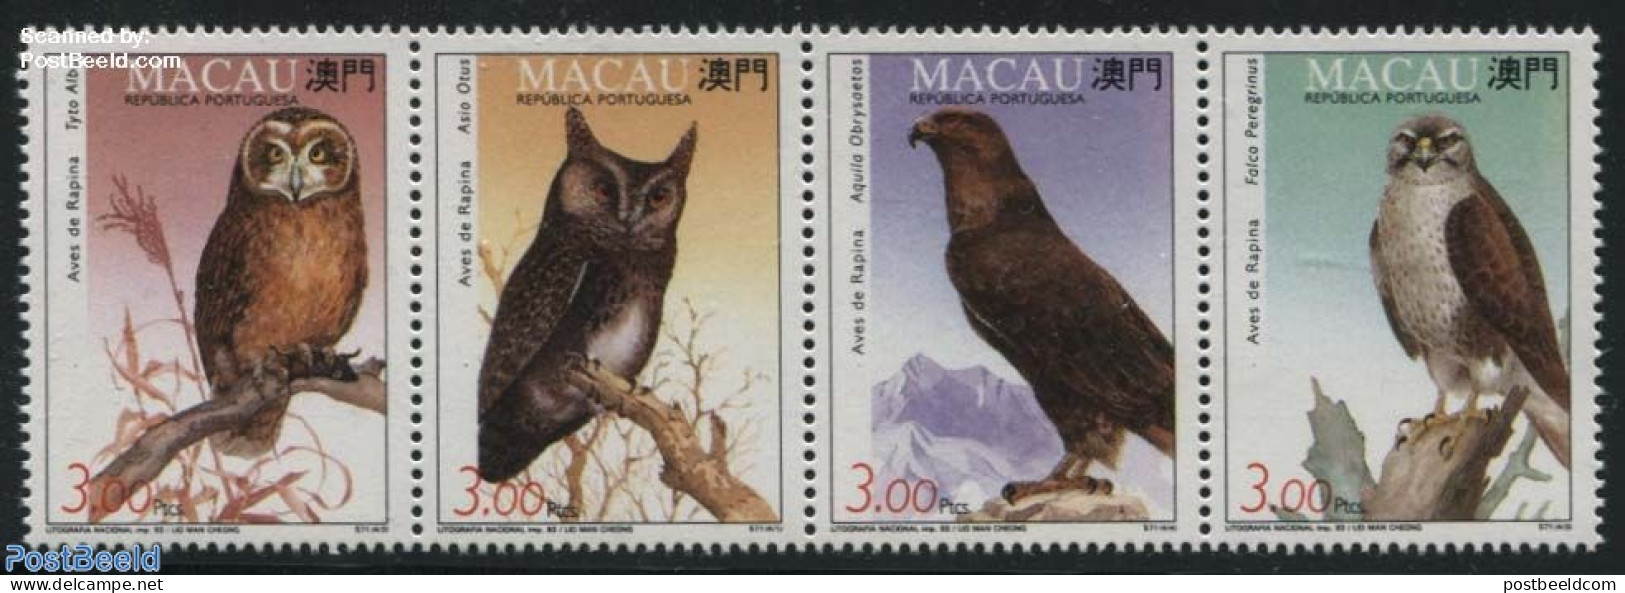 Macao 1993 Birds Of Prey 4v [:::] Or [+], Mint NH, Nature - Birds - Birds Of Prey - Owls - Unused Stamps